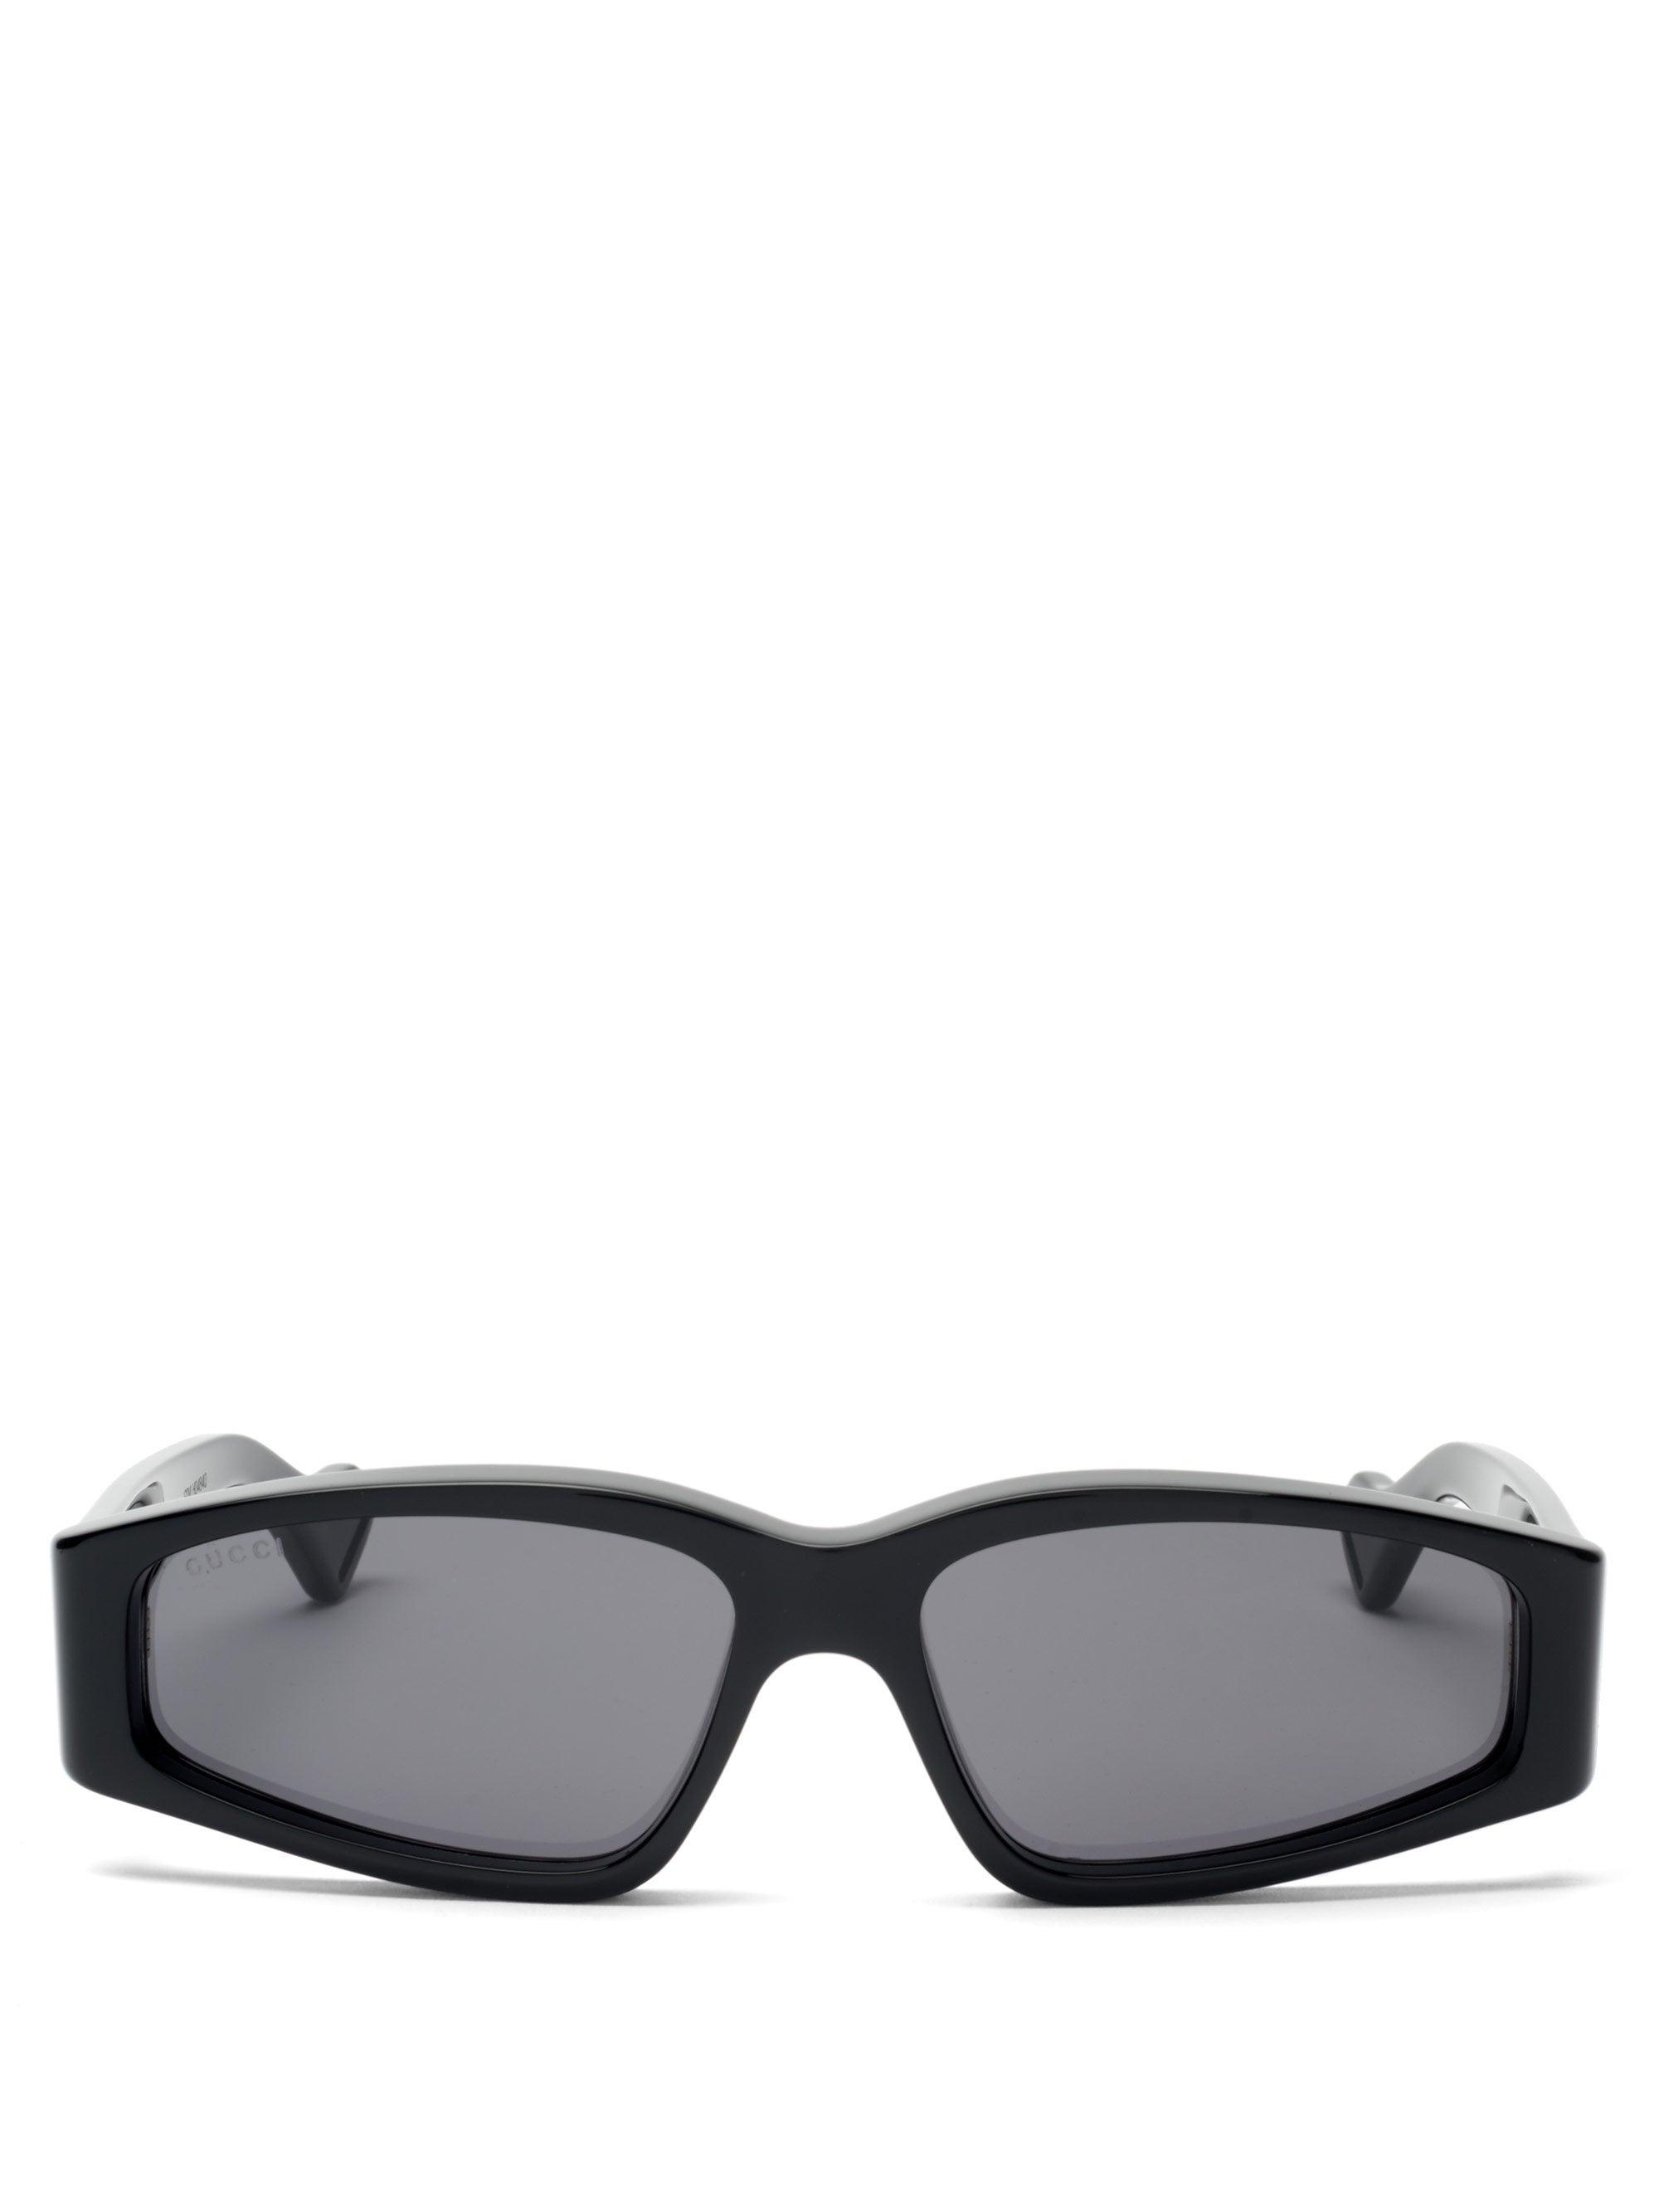 Gucci Slim Rectangular Acetate Sunglasses in Black Grey (Black) - Save